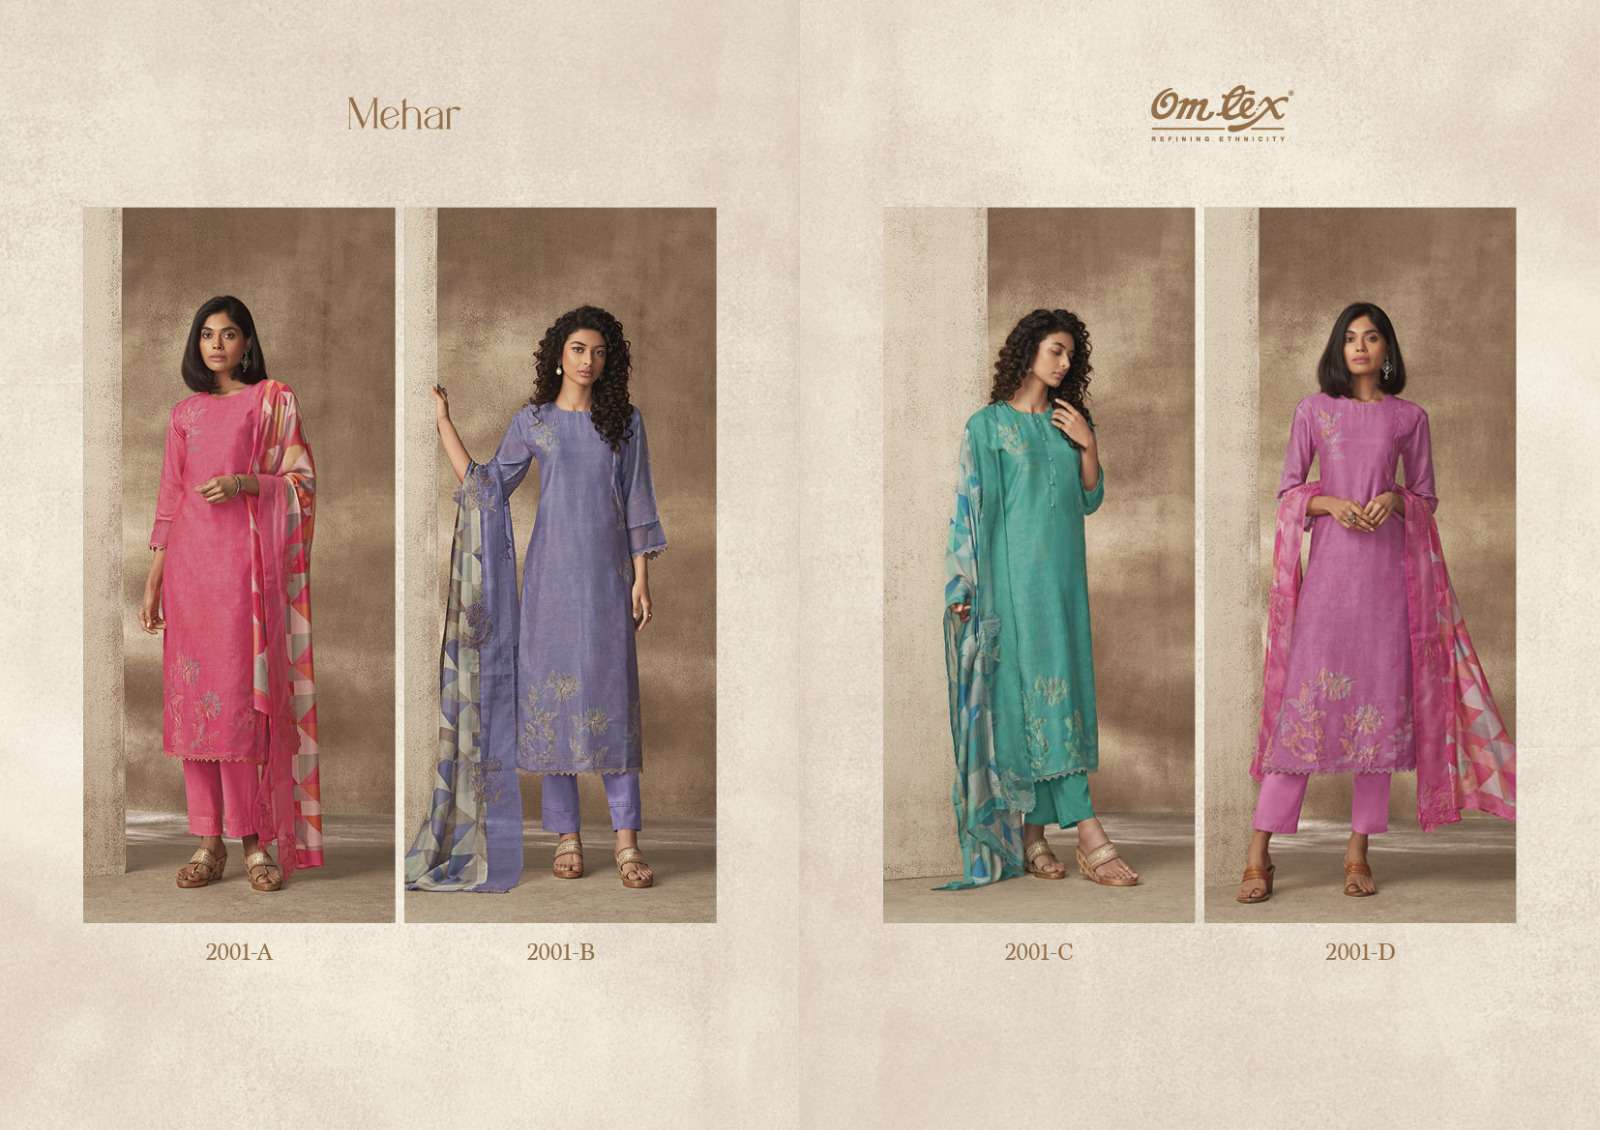 om tex meher 3001 series digital print with work designer salwar suits catalogue wholesaler surat 